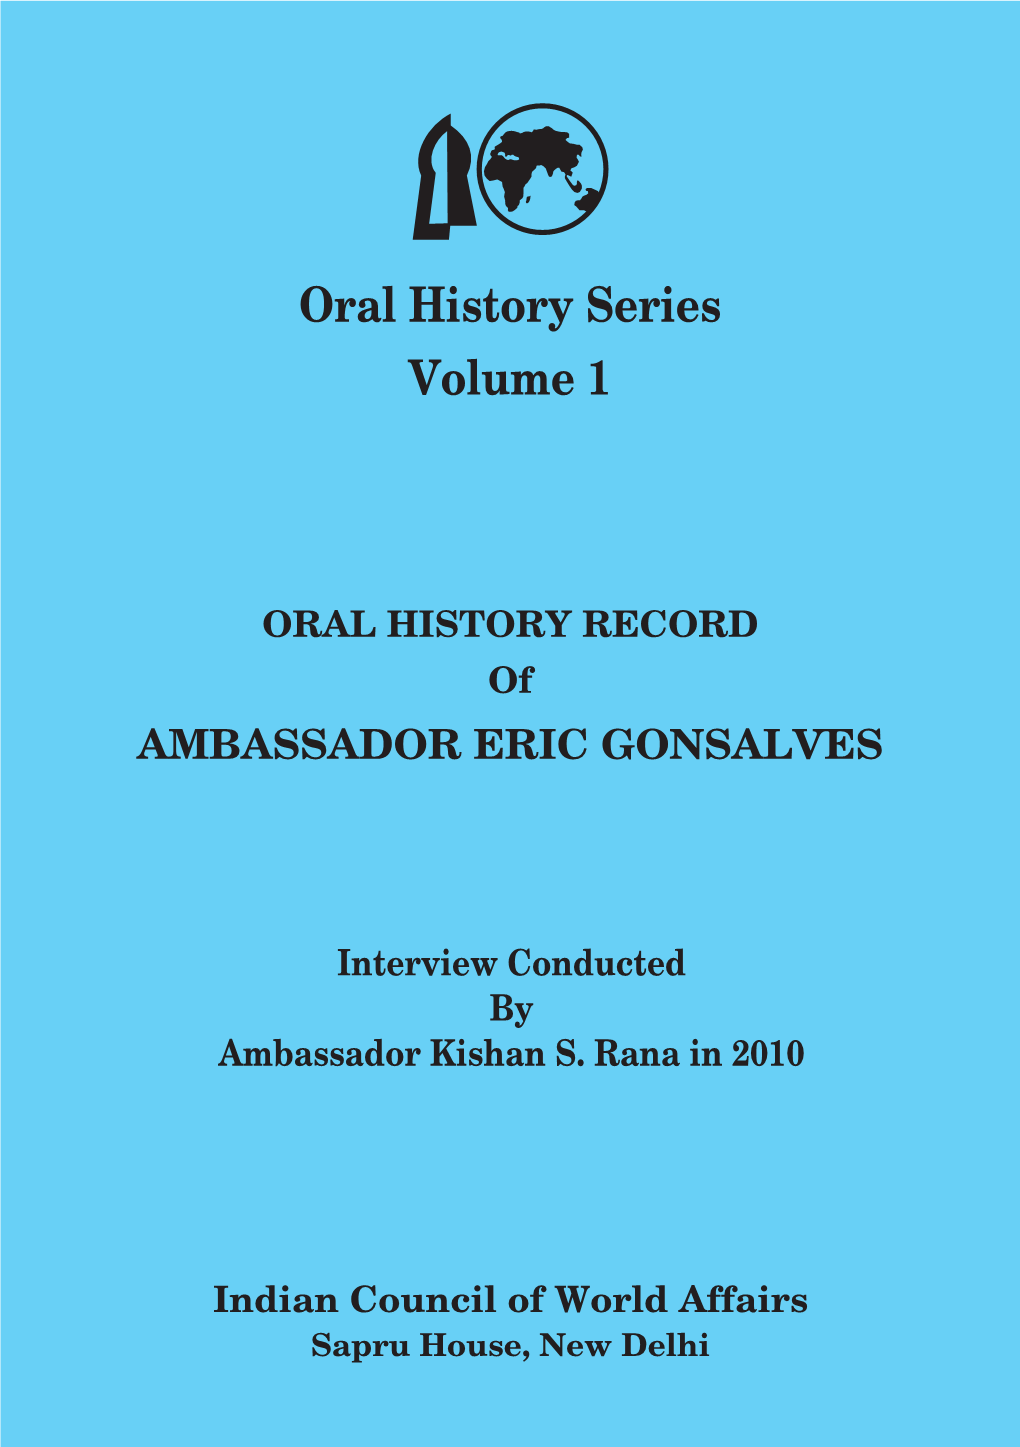 Ambassador Eric Gonsalves Interview Conducted by Ambassador Kishan S